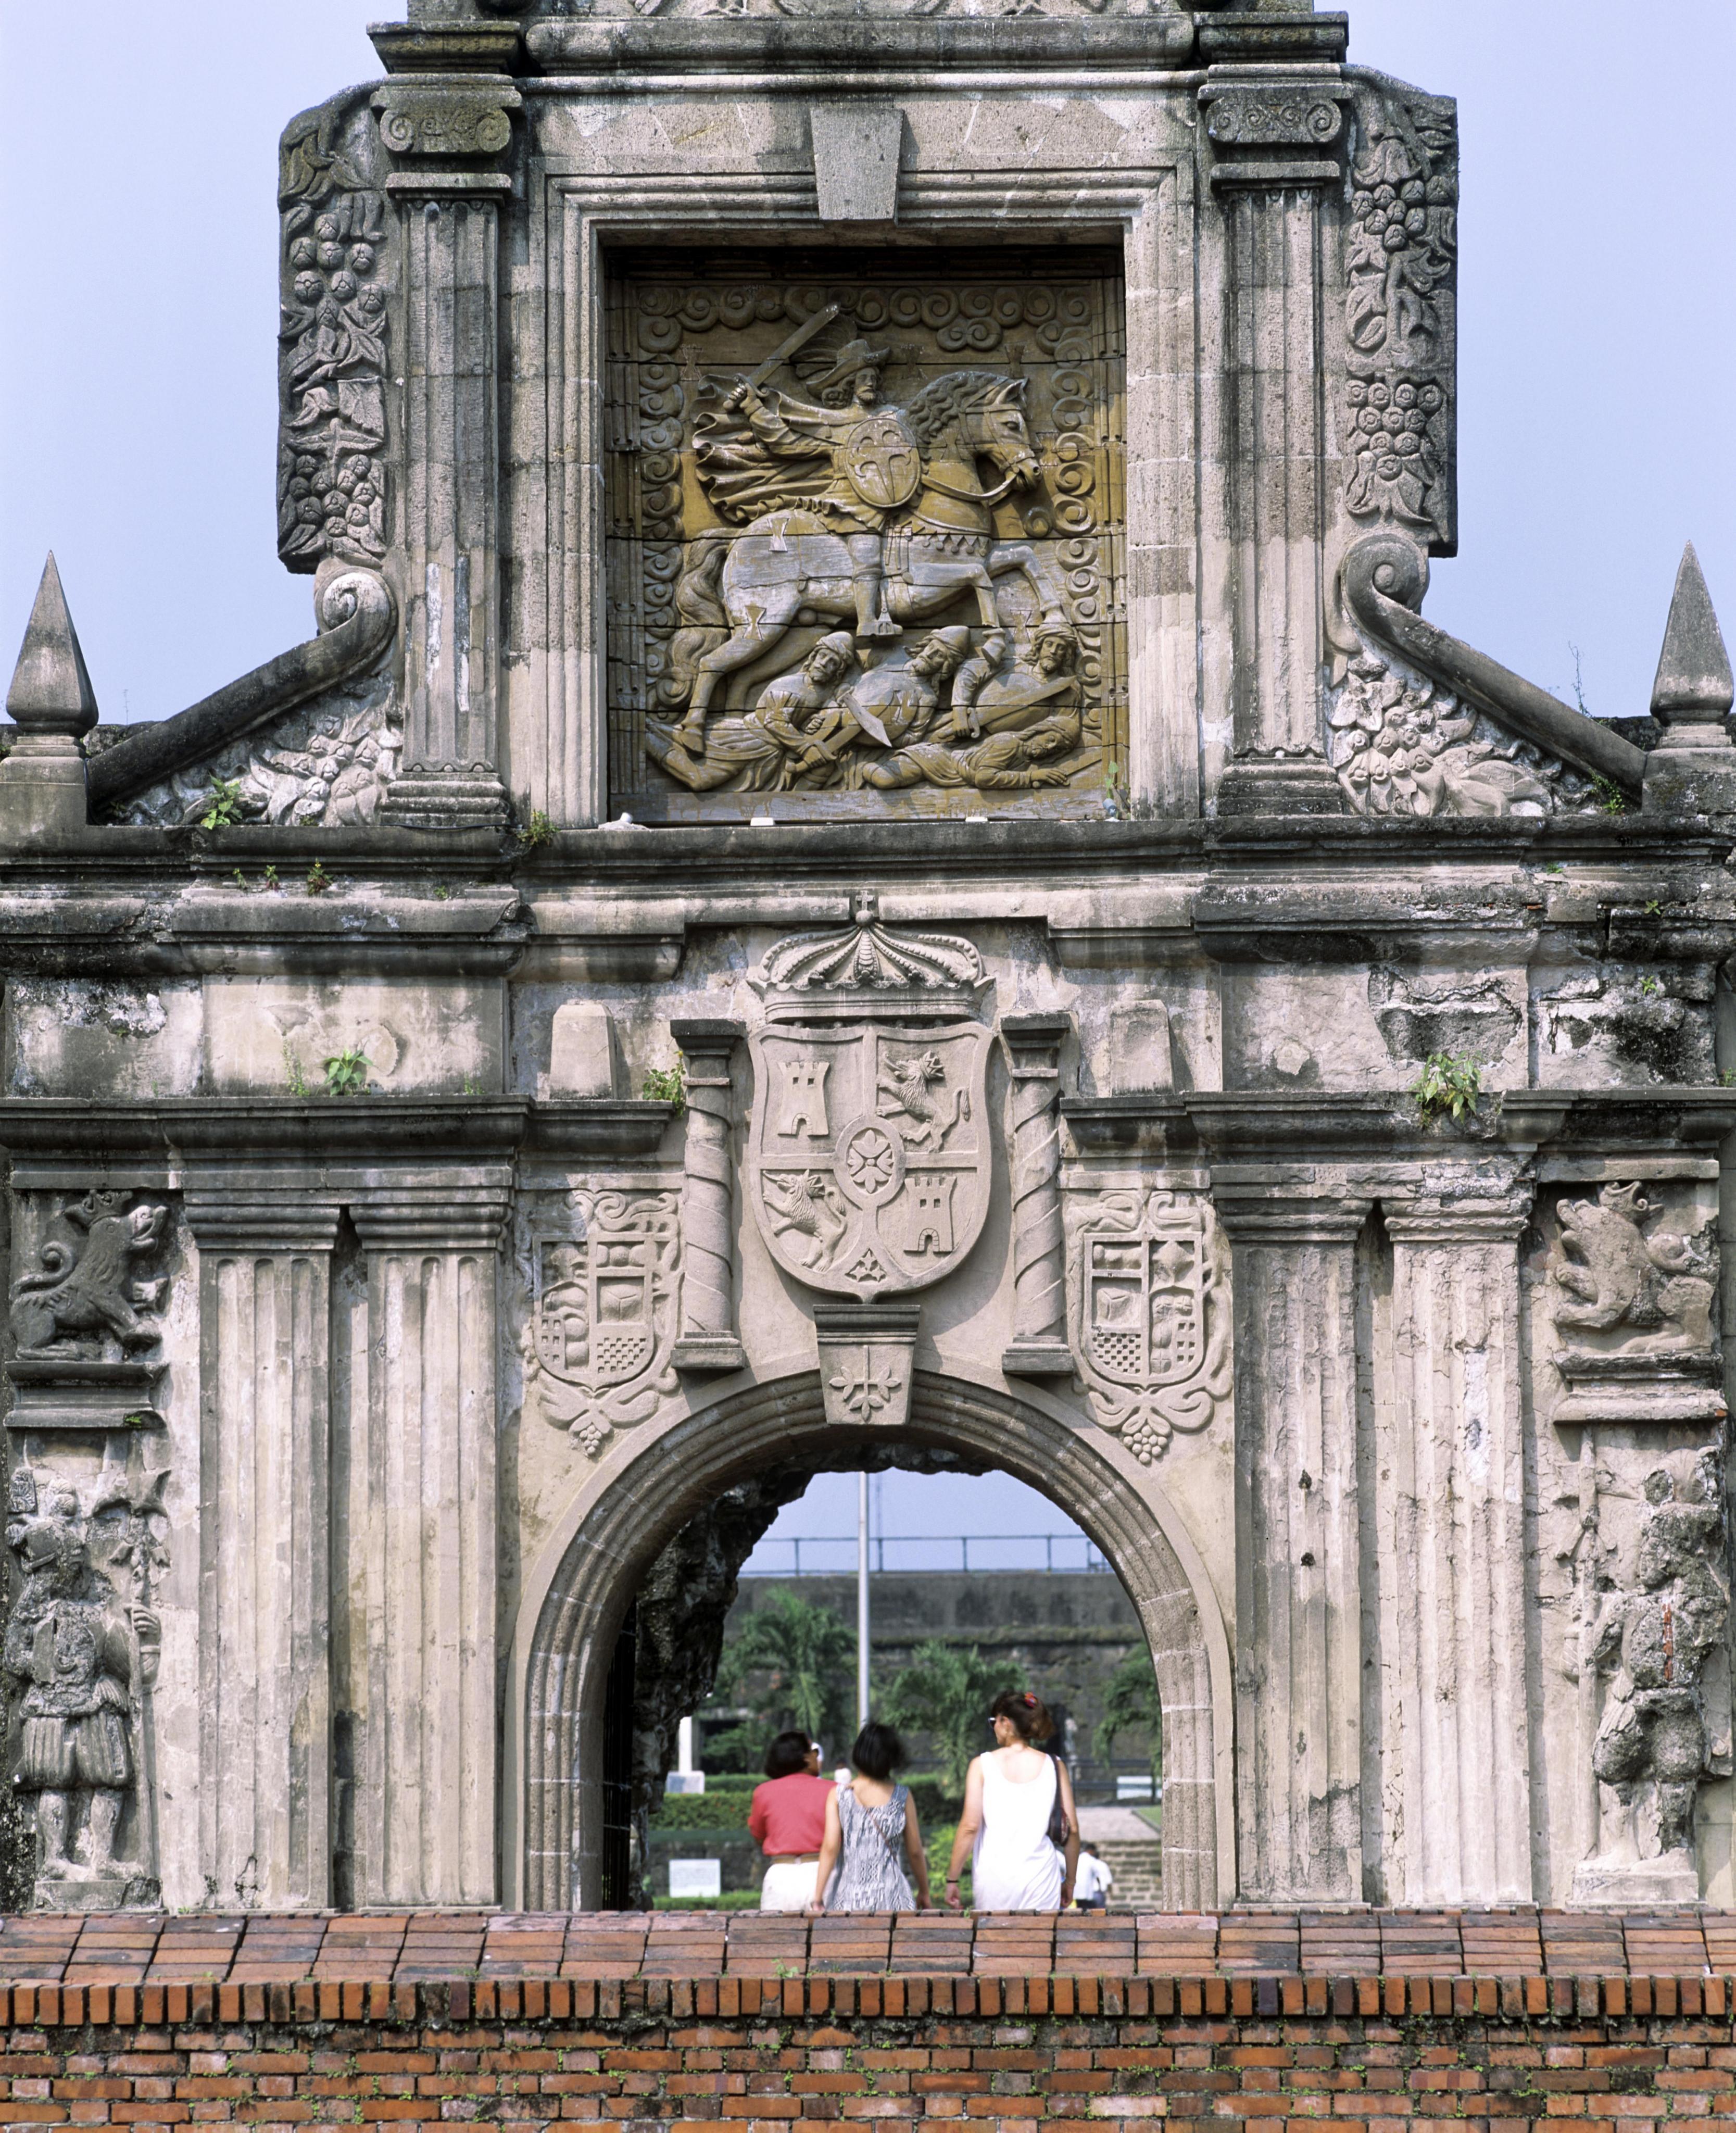 Main gate of Fort Santiago in Manila’s historical centre Intramuros.